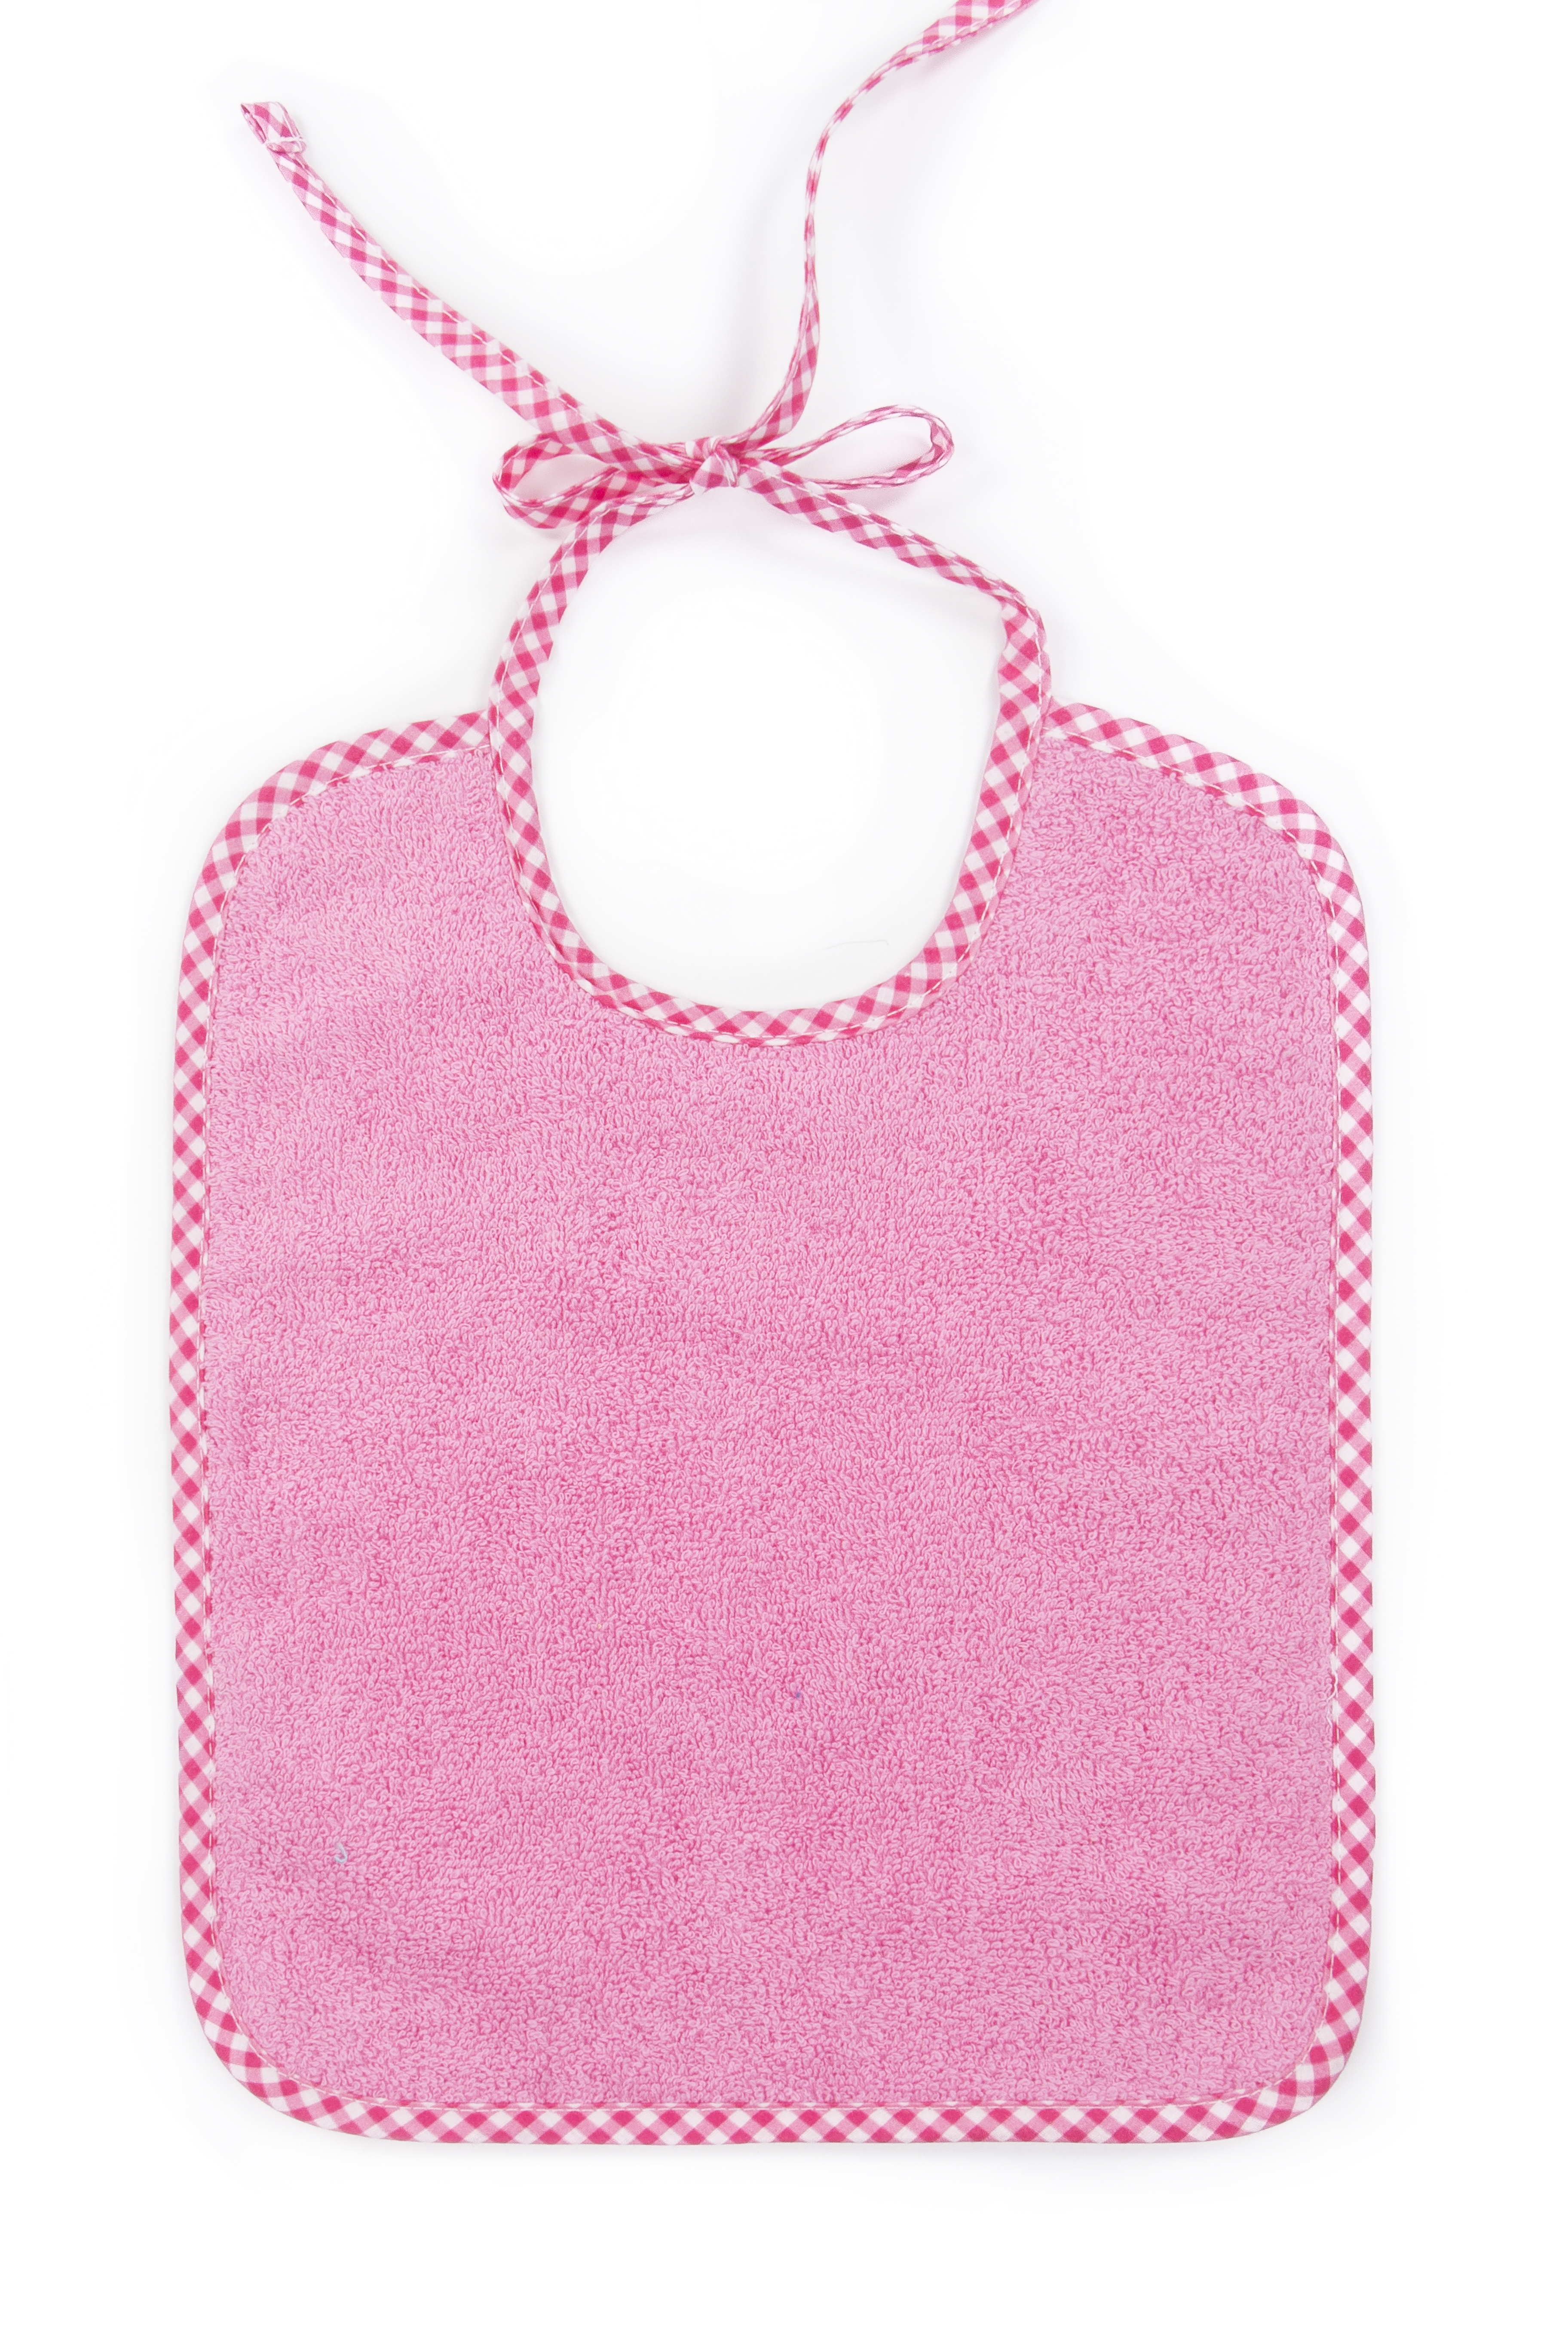 Bavoir with straps Girl, uni pink, 35x27 cm 